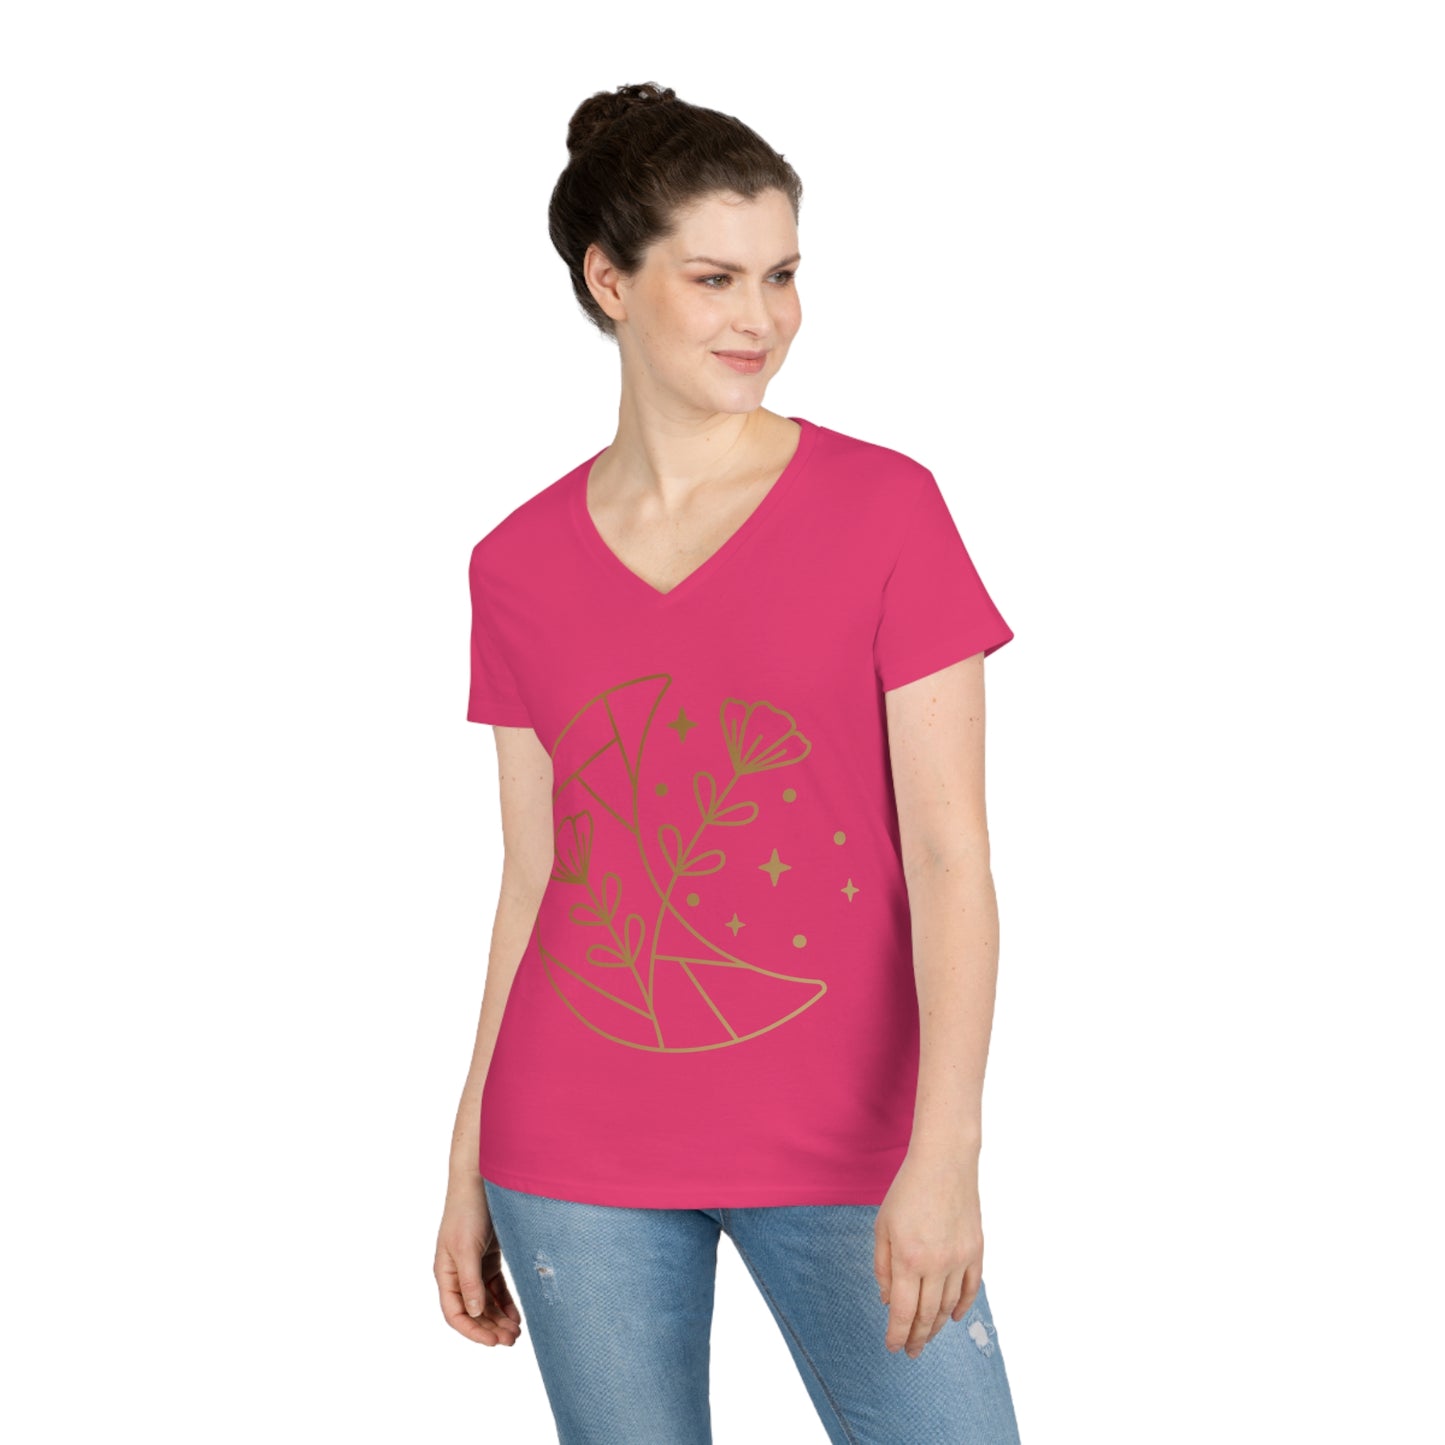 Ladies' V-Neck T-Shirt, Earthy Tee, Moon and Stars Shirt, Short Sleeve Women's Shirt